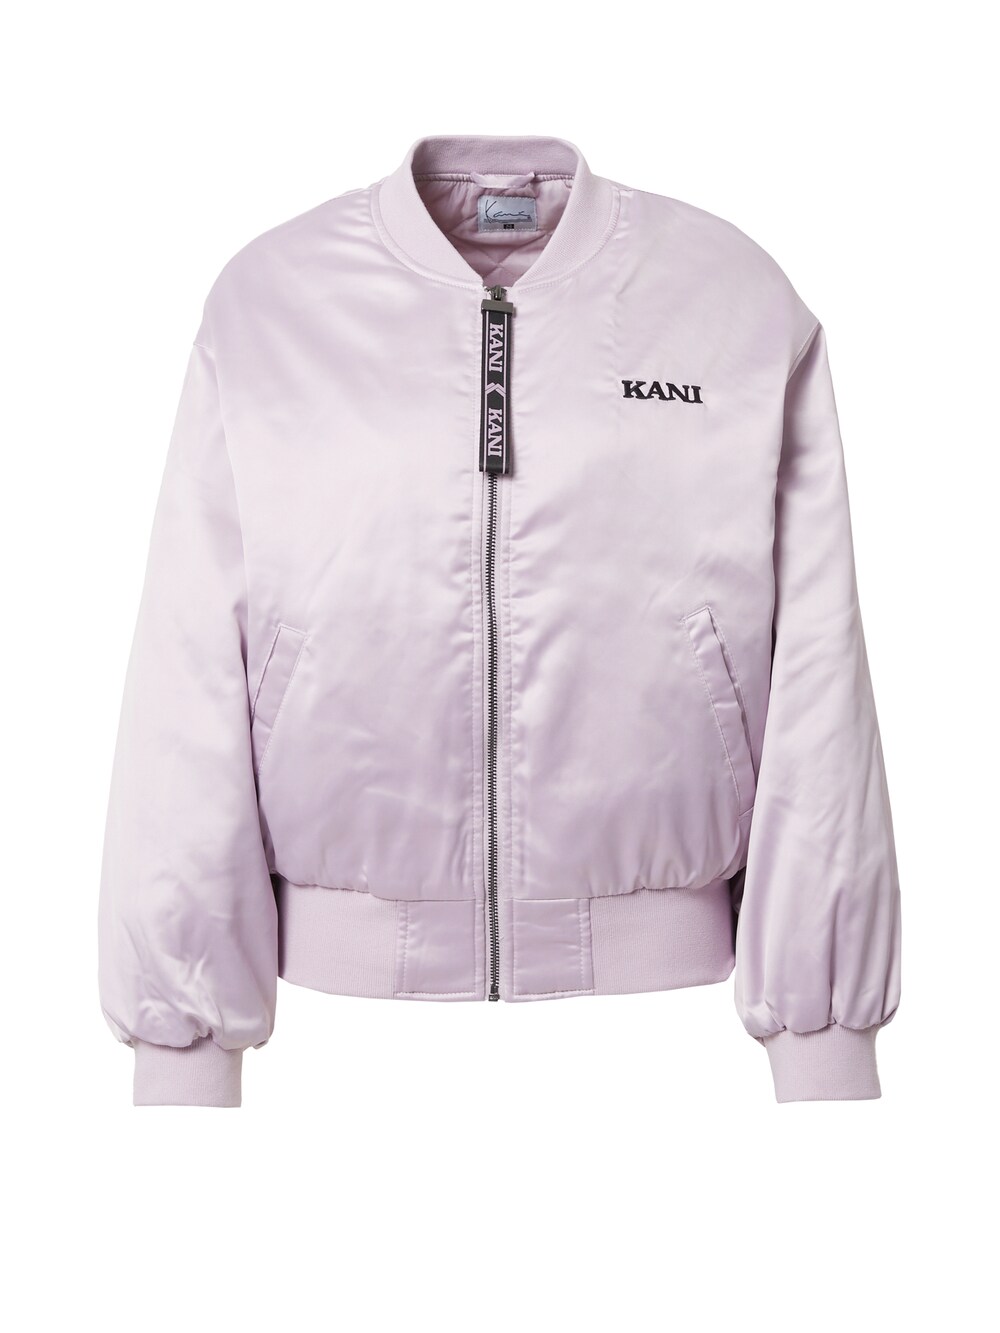 Межсезонная куртка Karl Kani, сирень межсезонная куртка on vacation club сирень